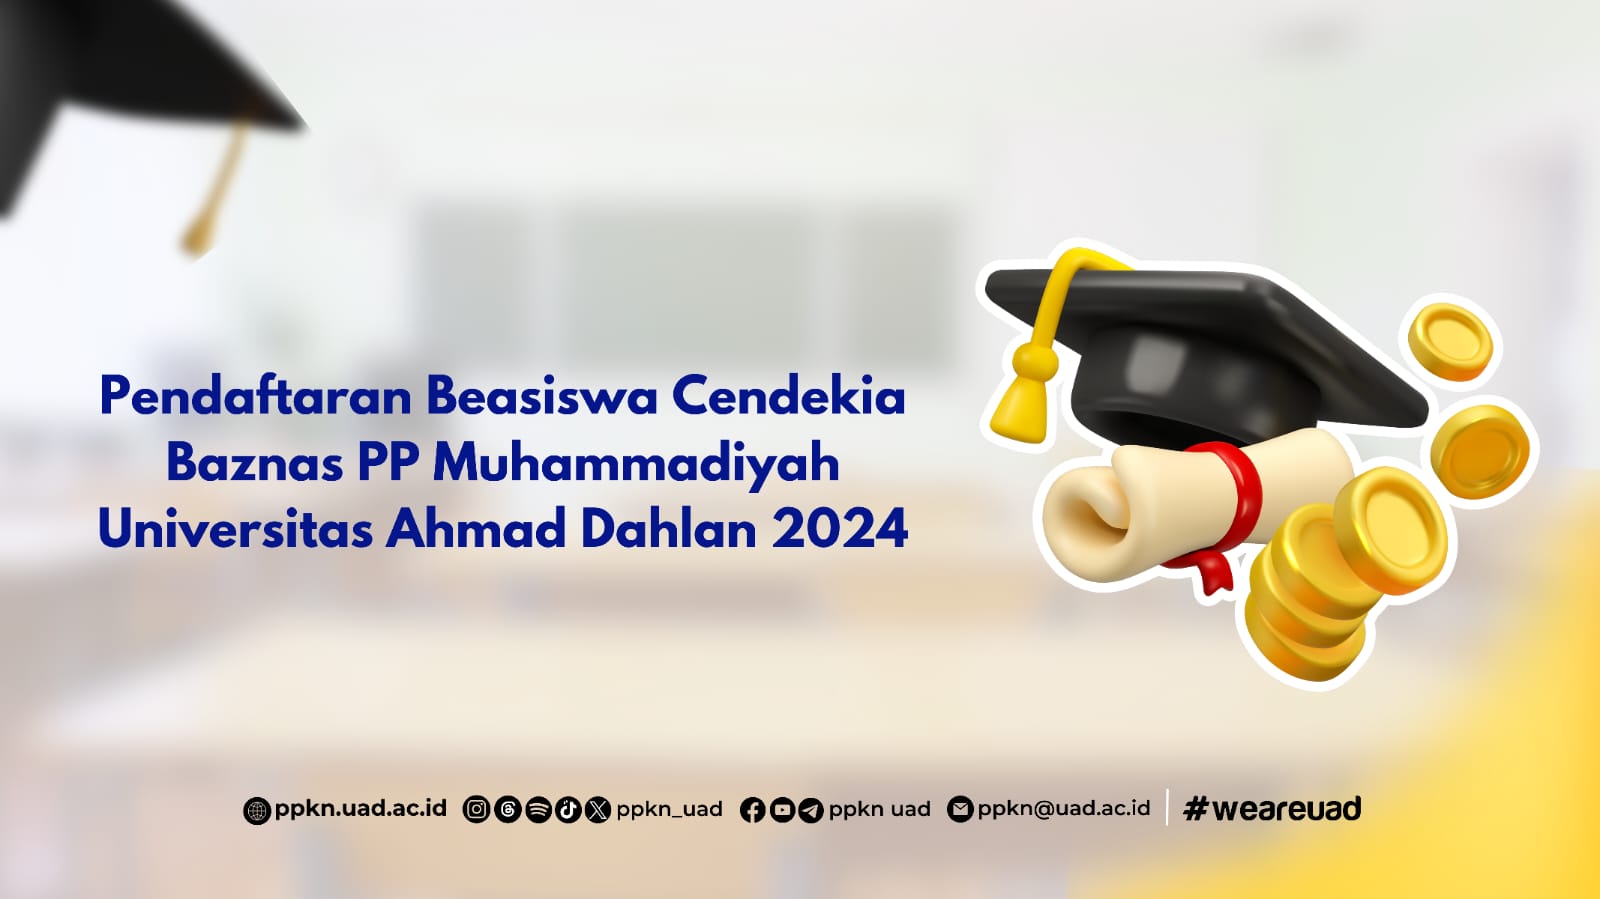 Pendaftaran Beasiswa Cendekia Baznas PP Muhammadiyah Universitas Ahmad Dahlan 2024